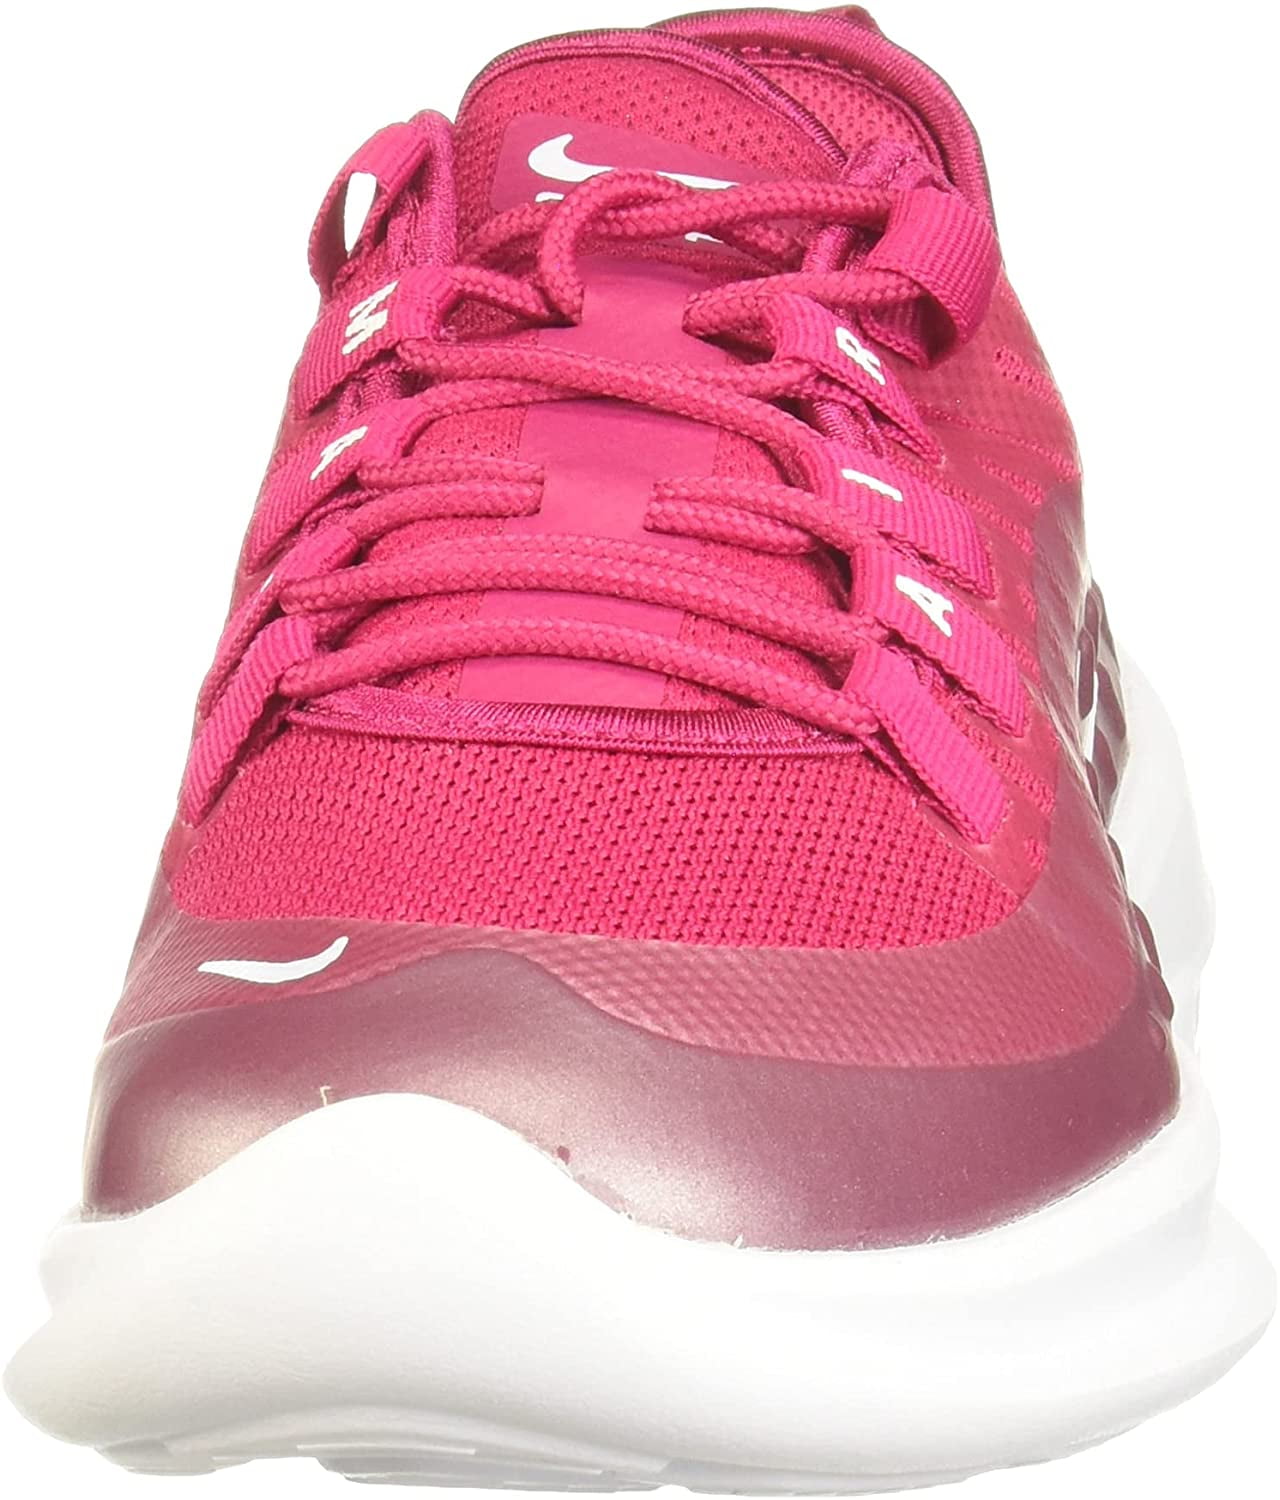 Women's Nike Air Max Wild Cherry/White-Noble Red (AA2168 602) - 6.5 - Walmart.com